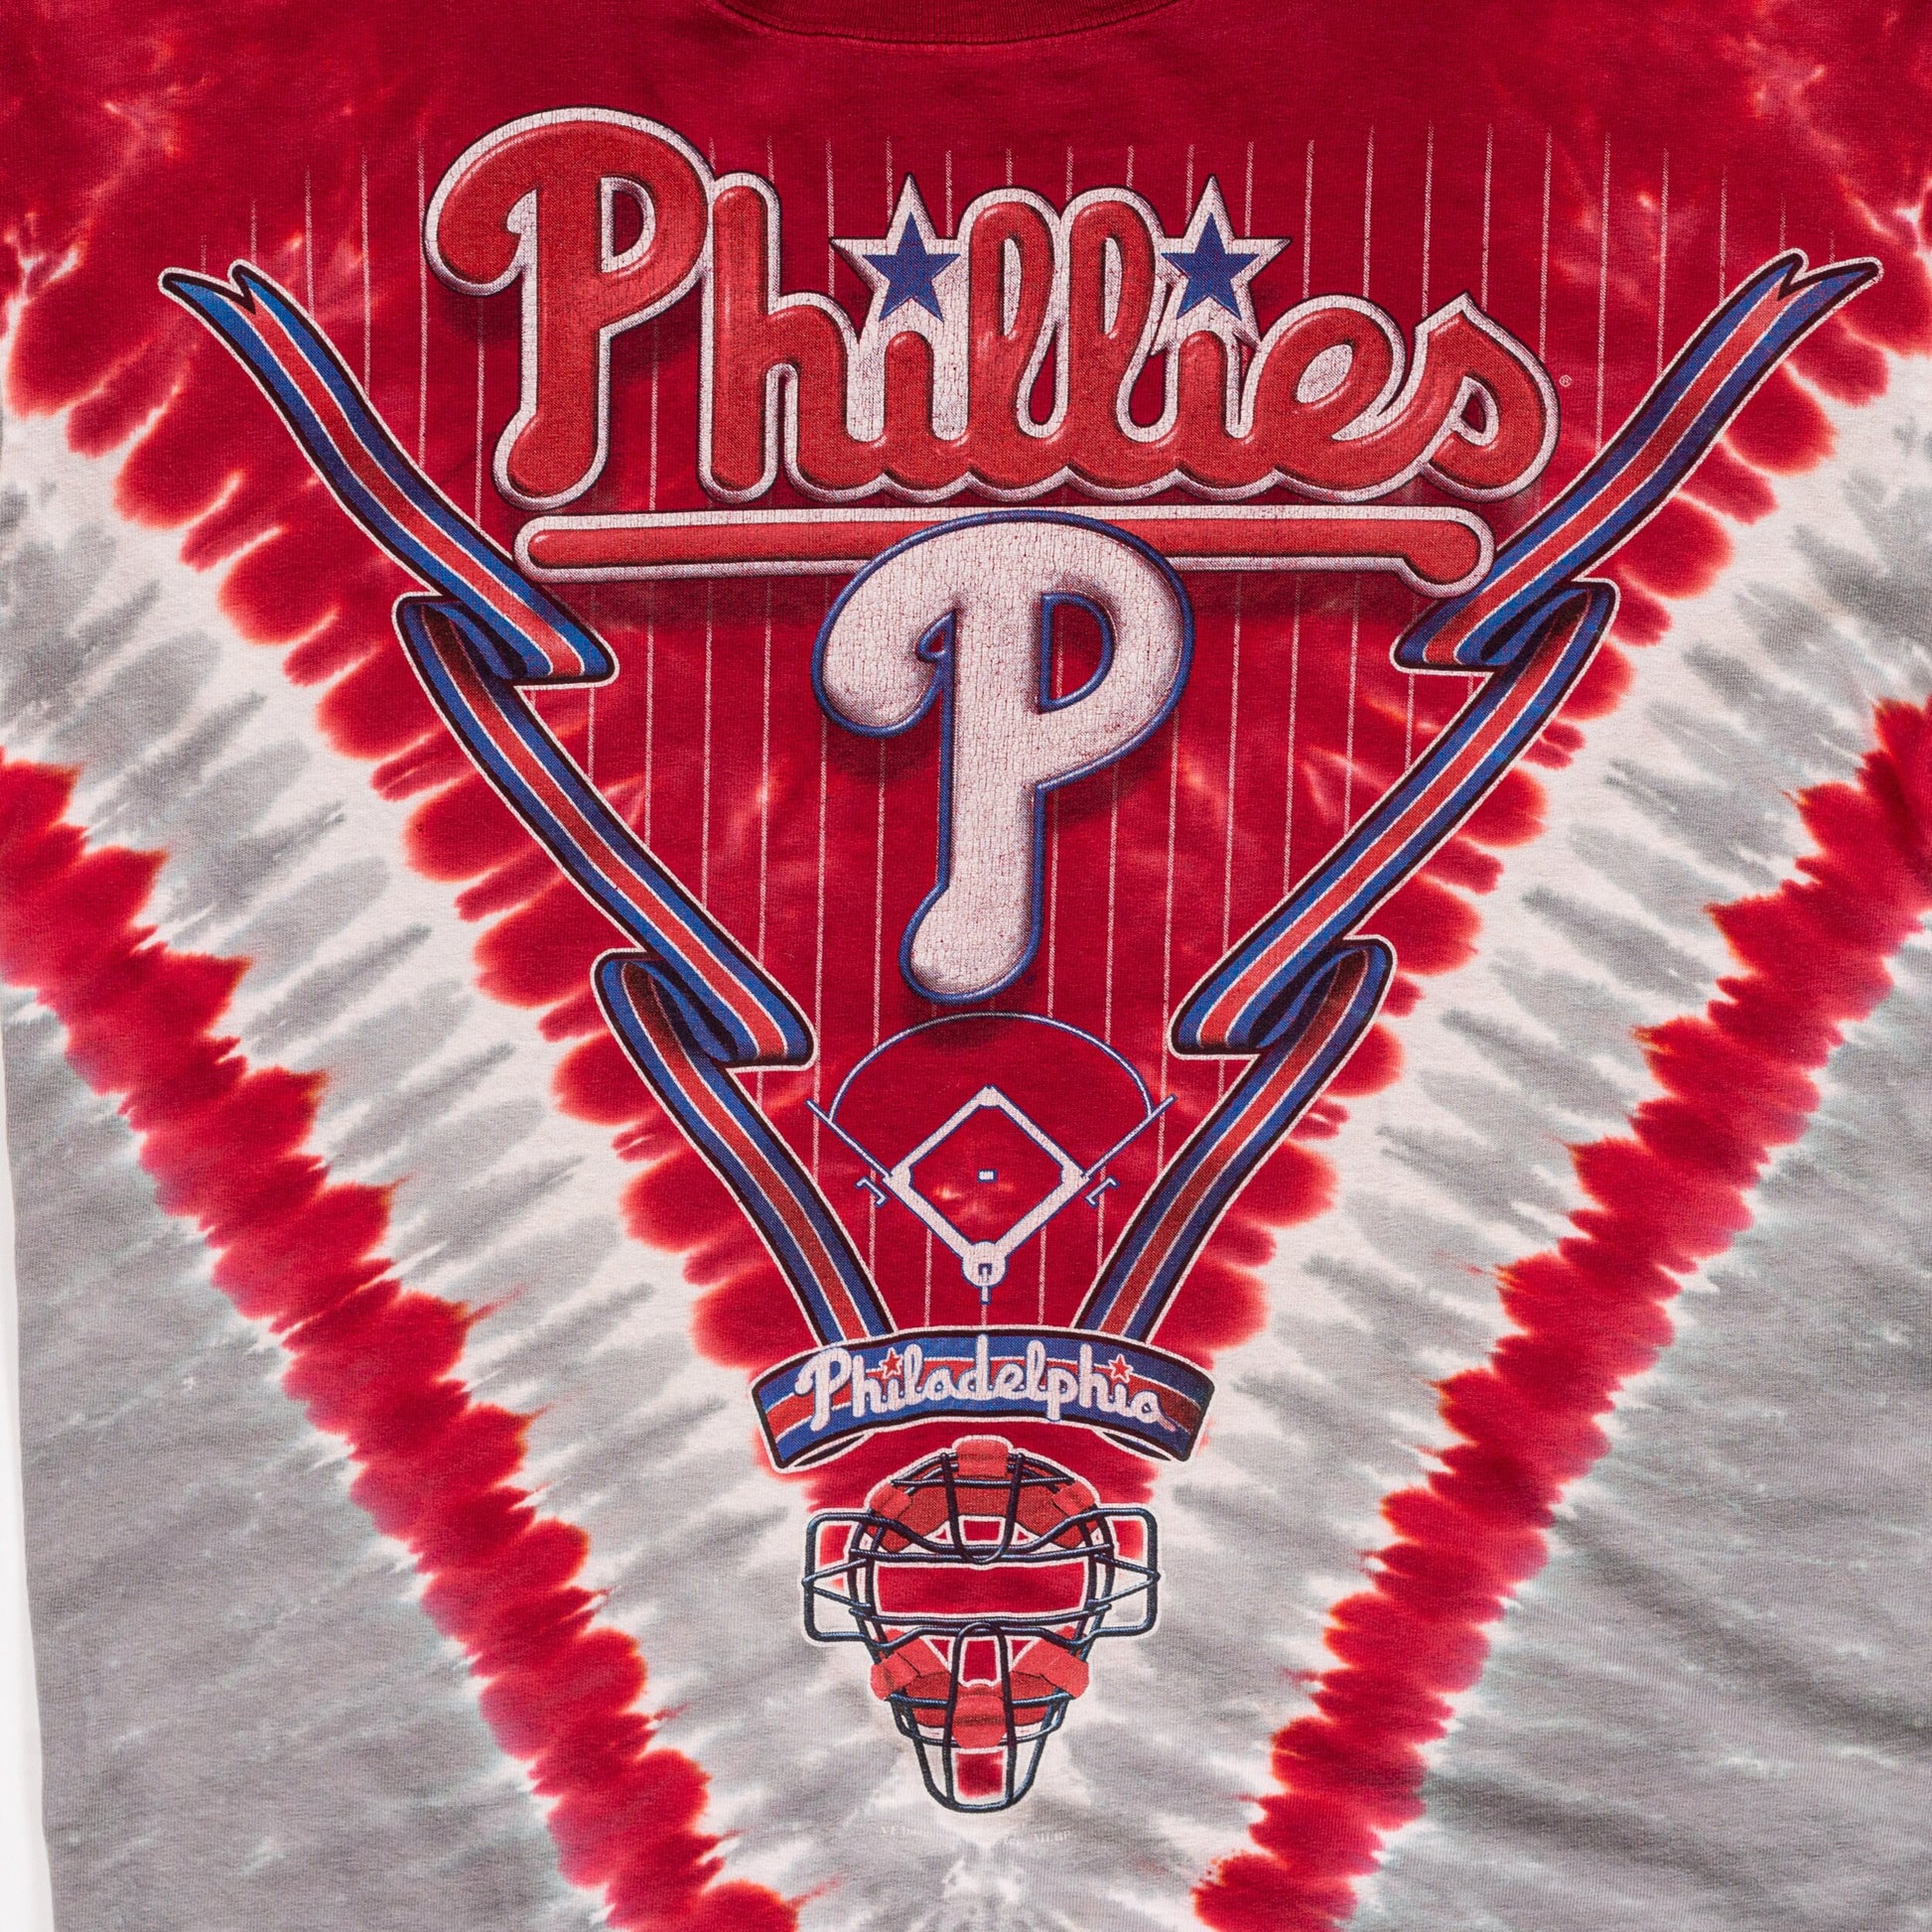 Vintage Philadelphia Baseball Sweatshirt Phillies 90s Mlb Shirt